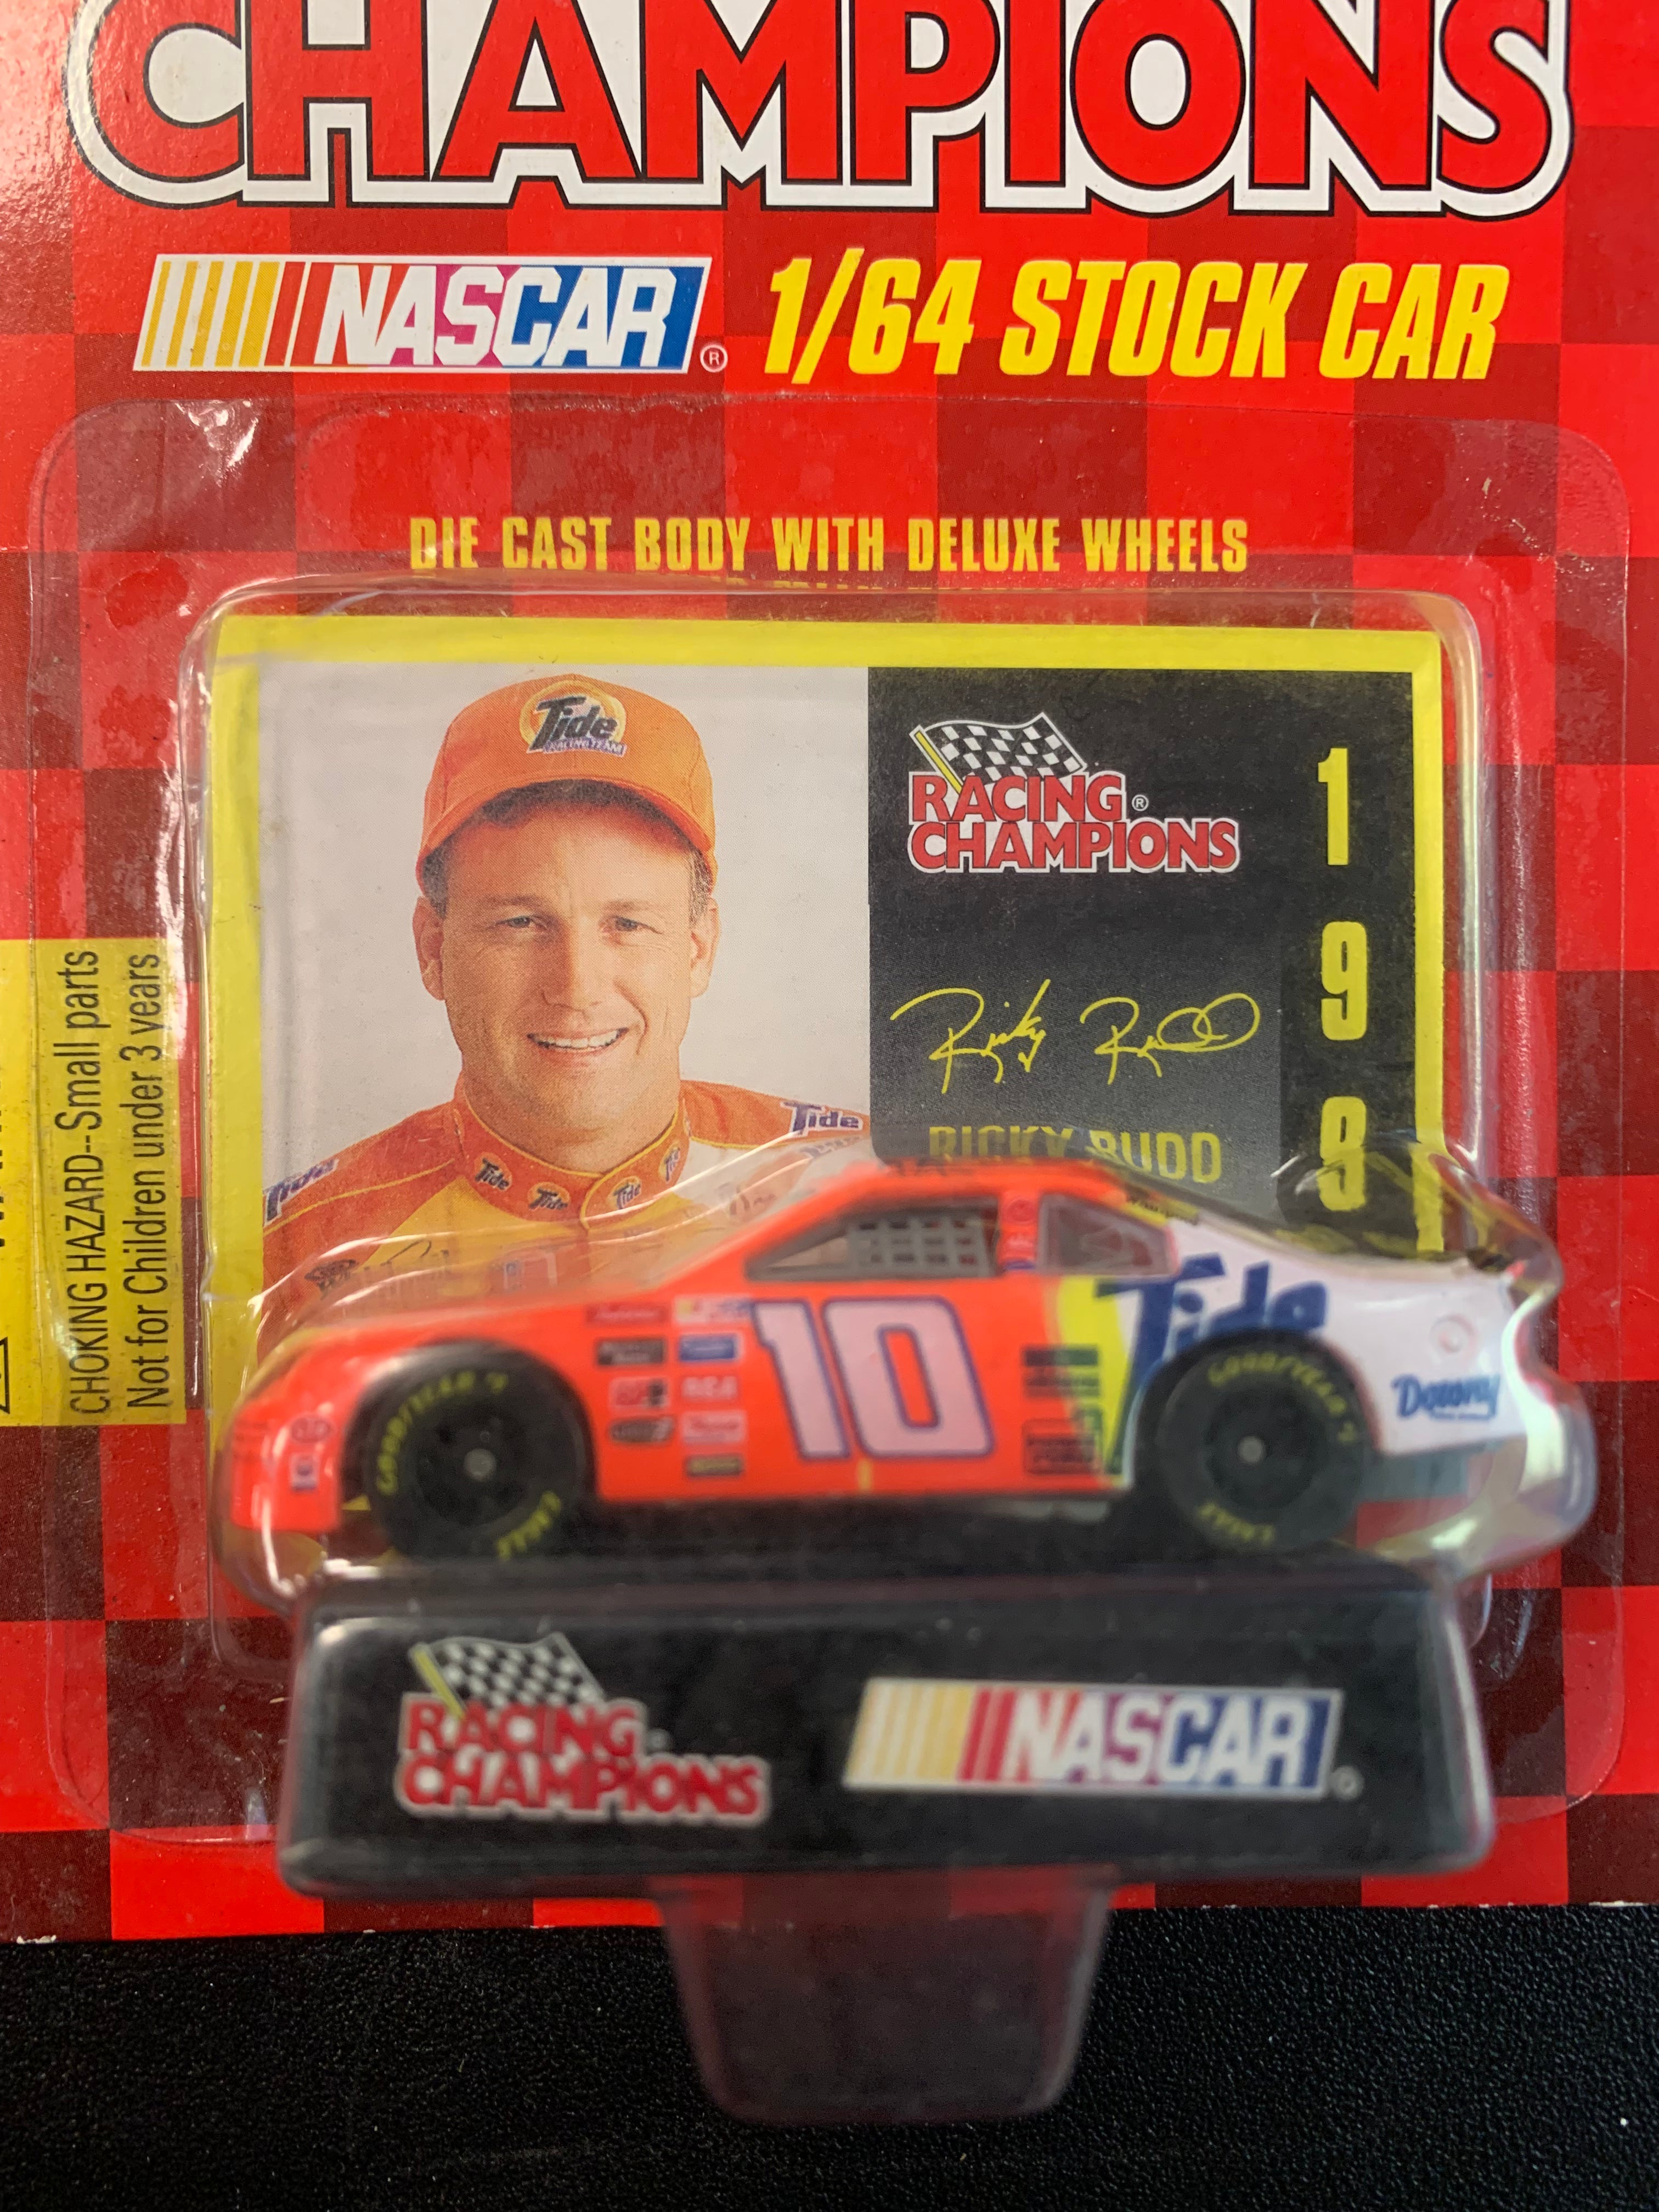 RACING CHAMPIONS NASCAR 1/64 STOCK CAR 1996 RICKY RUDD #10 TIDE